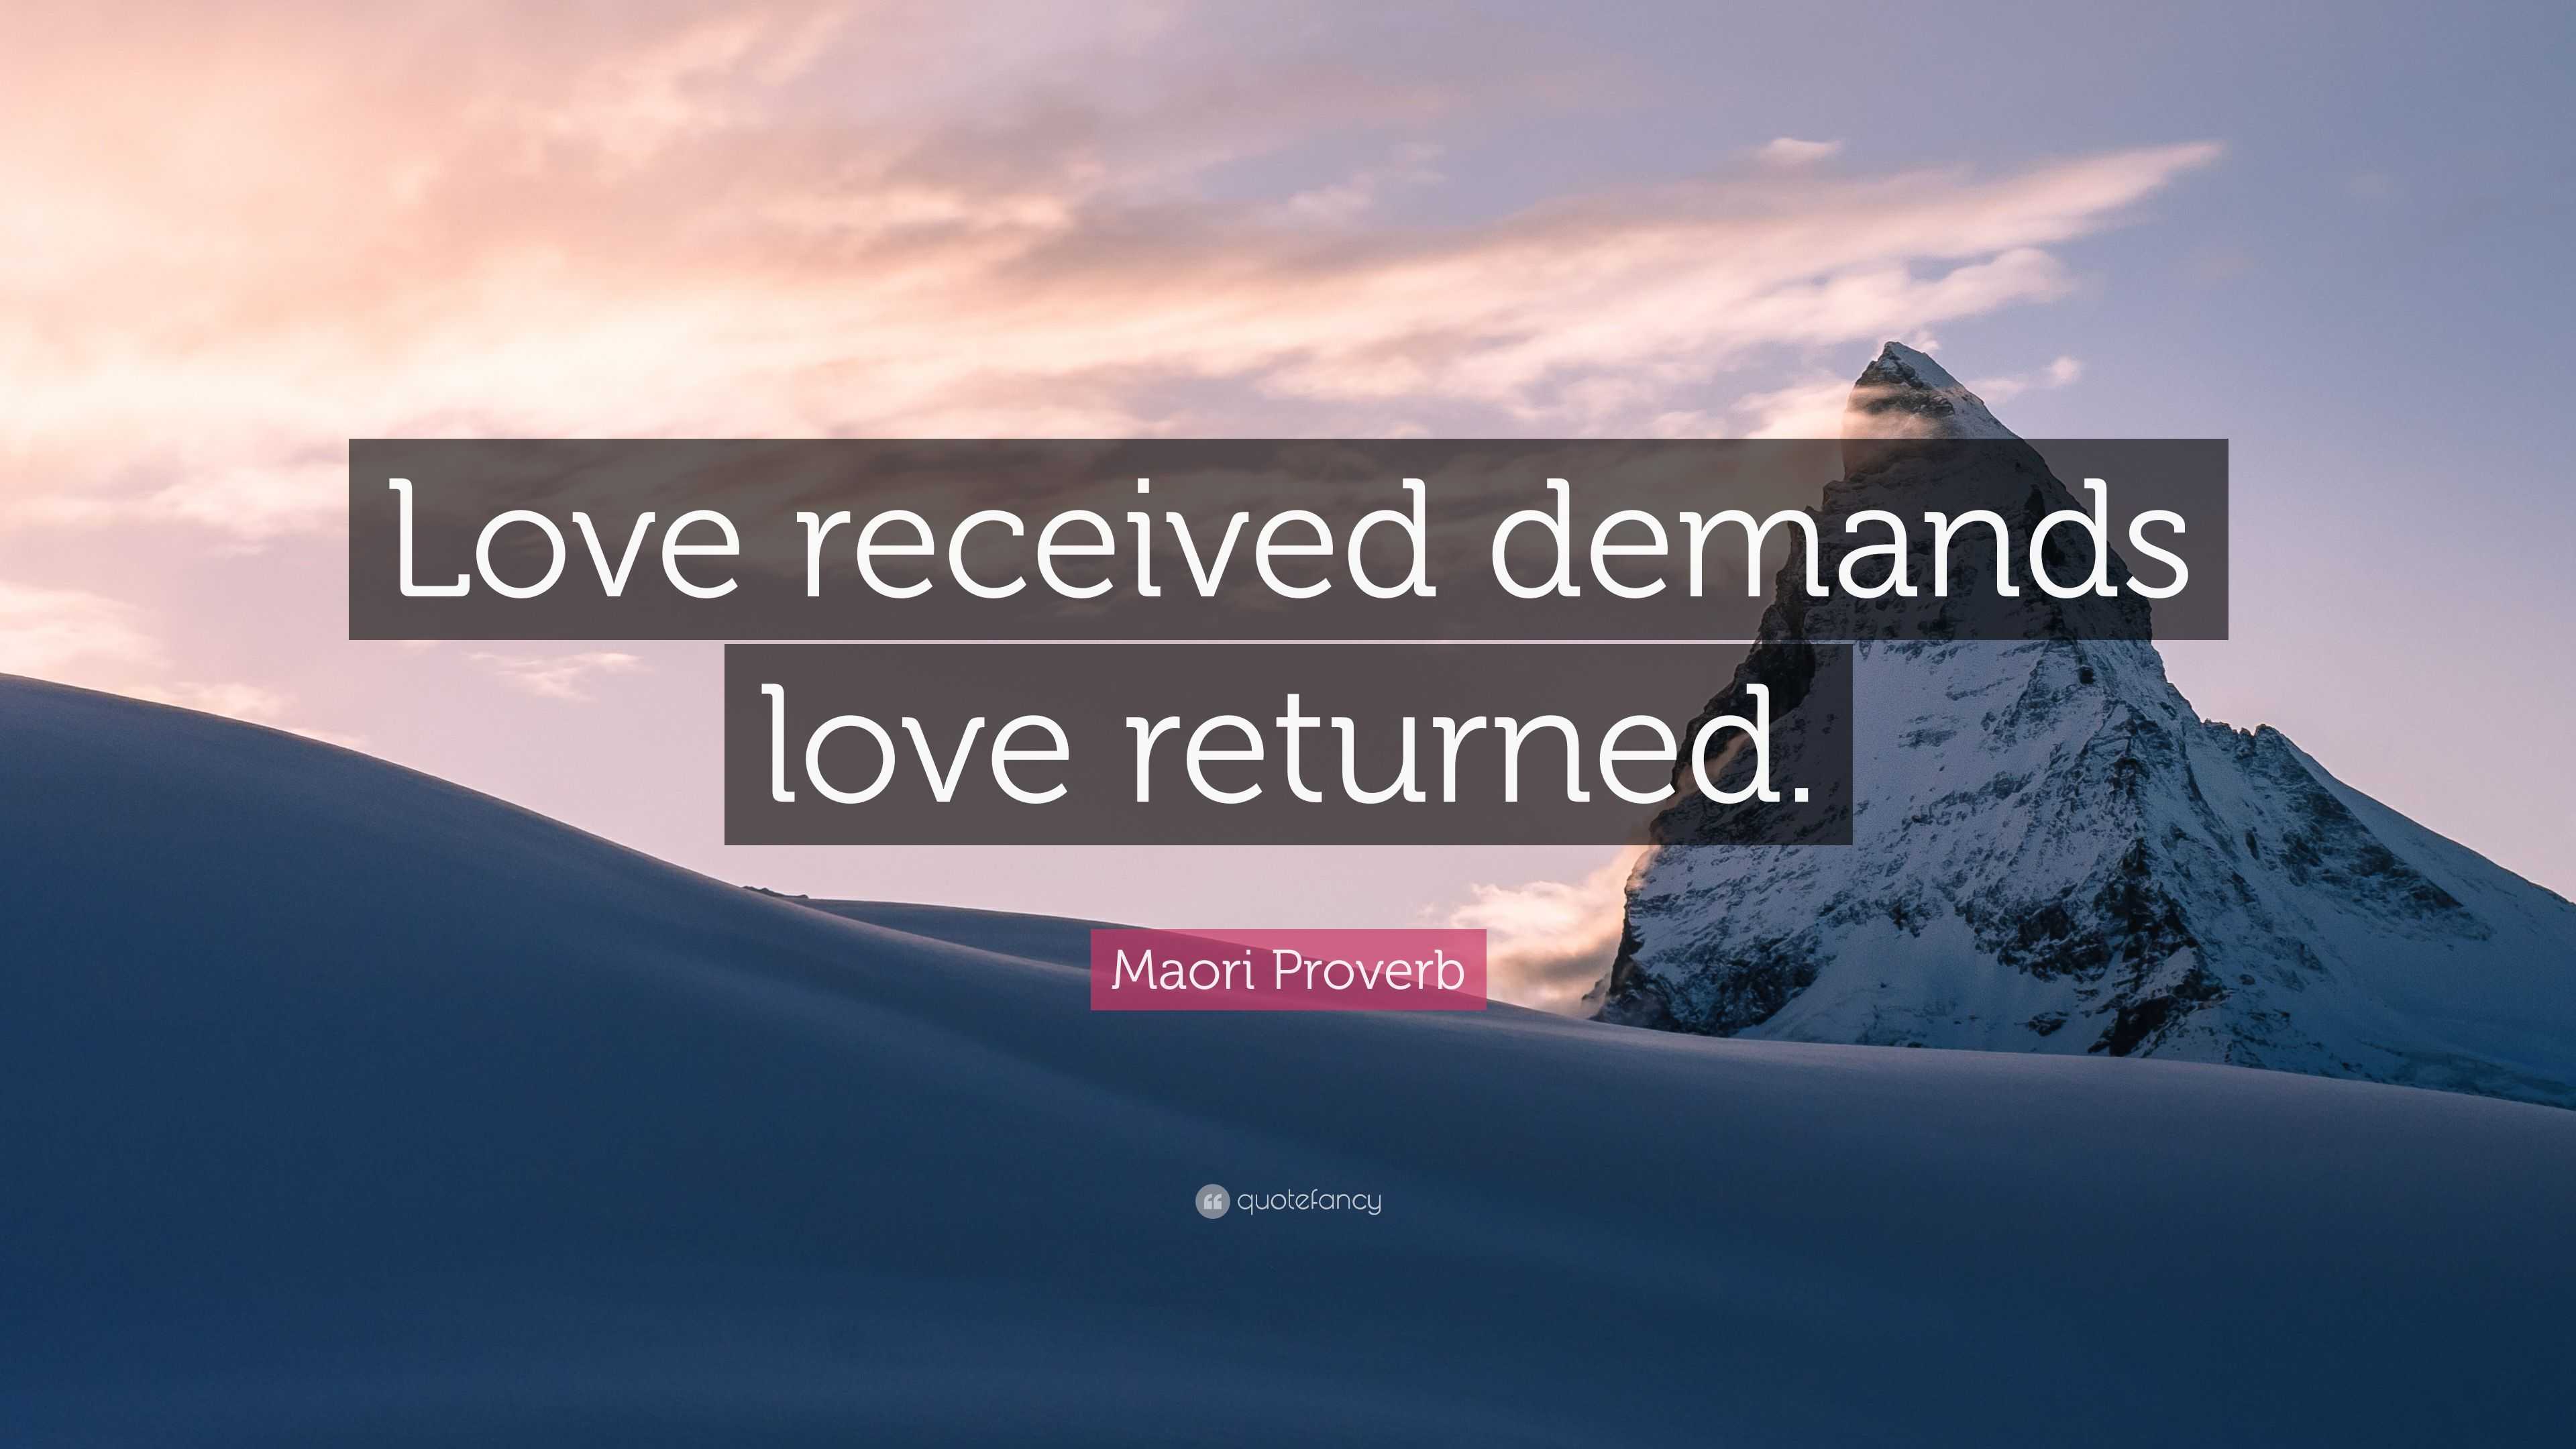 Maori Proverb Quote: “Love received demands love returned.”